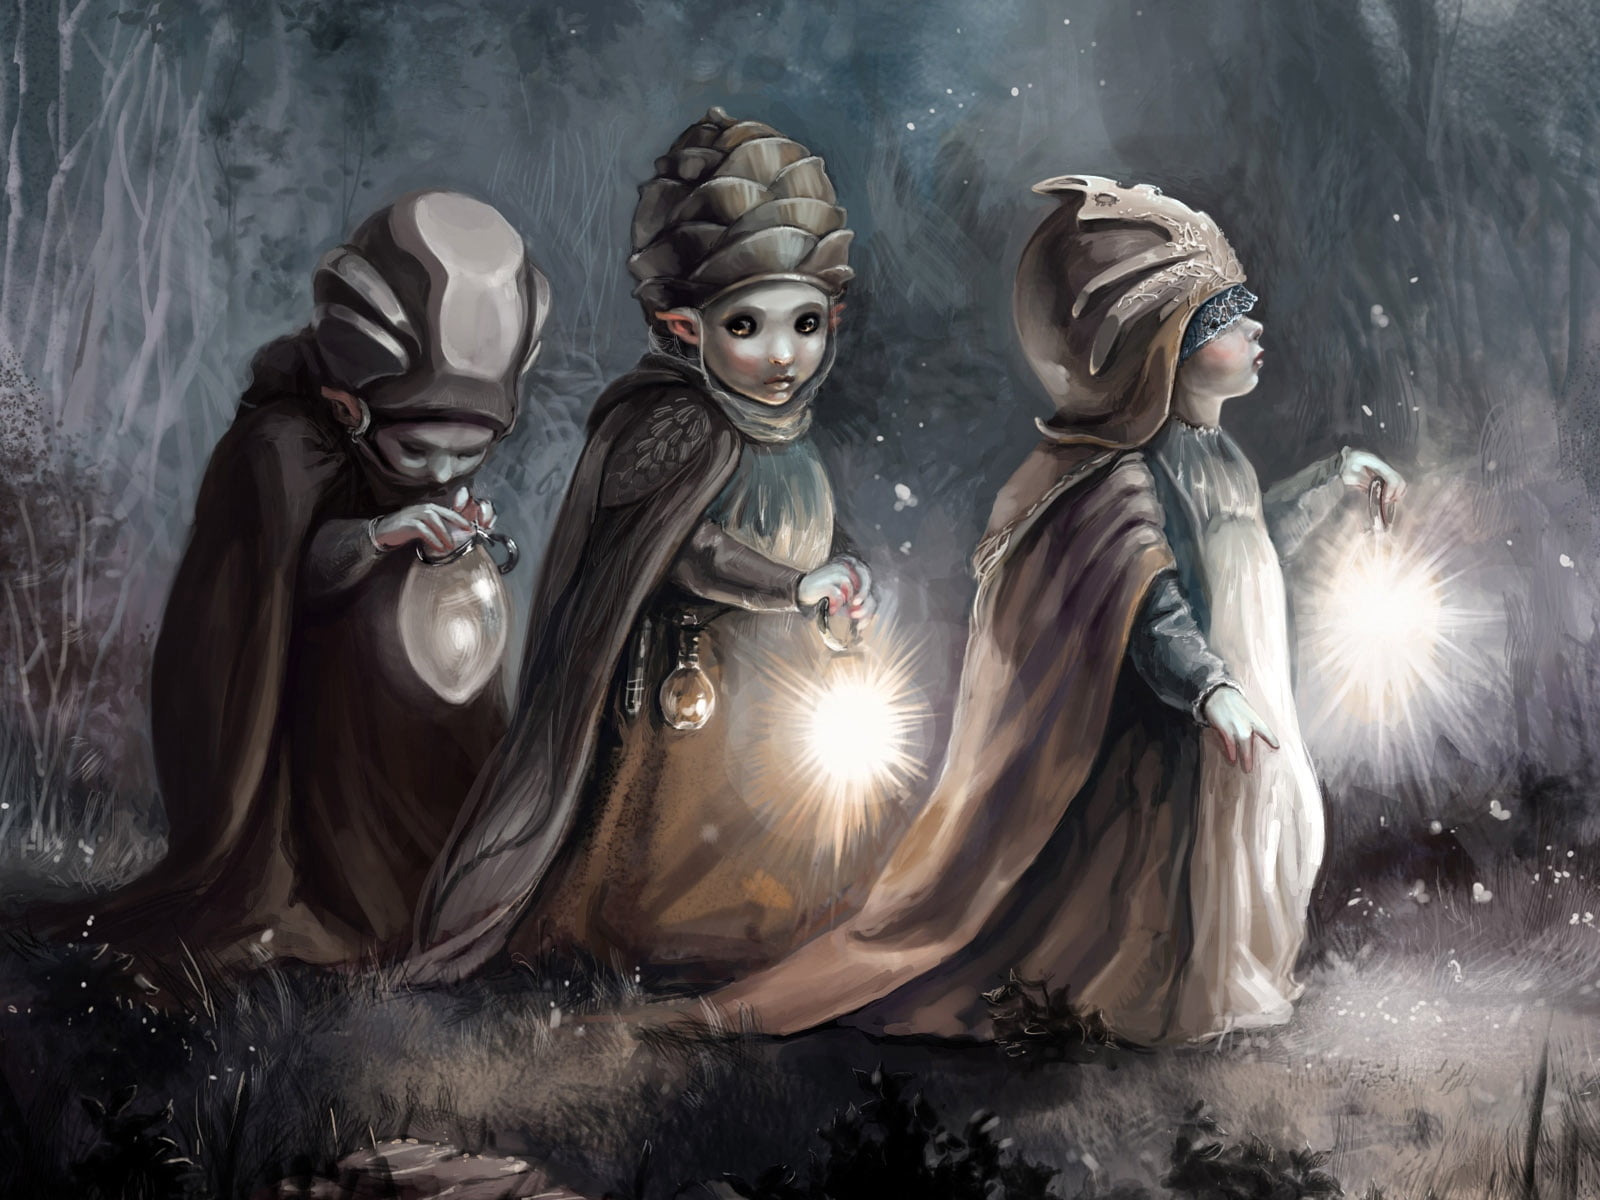 Free Download Hd Wallpaper Three Dwarfs Holding Lanterns Gnomes Way Night Spirituality 